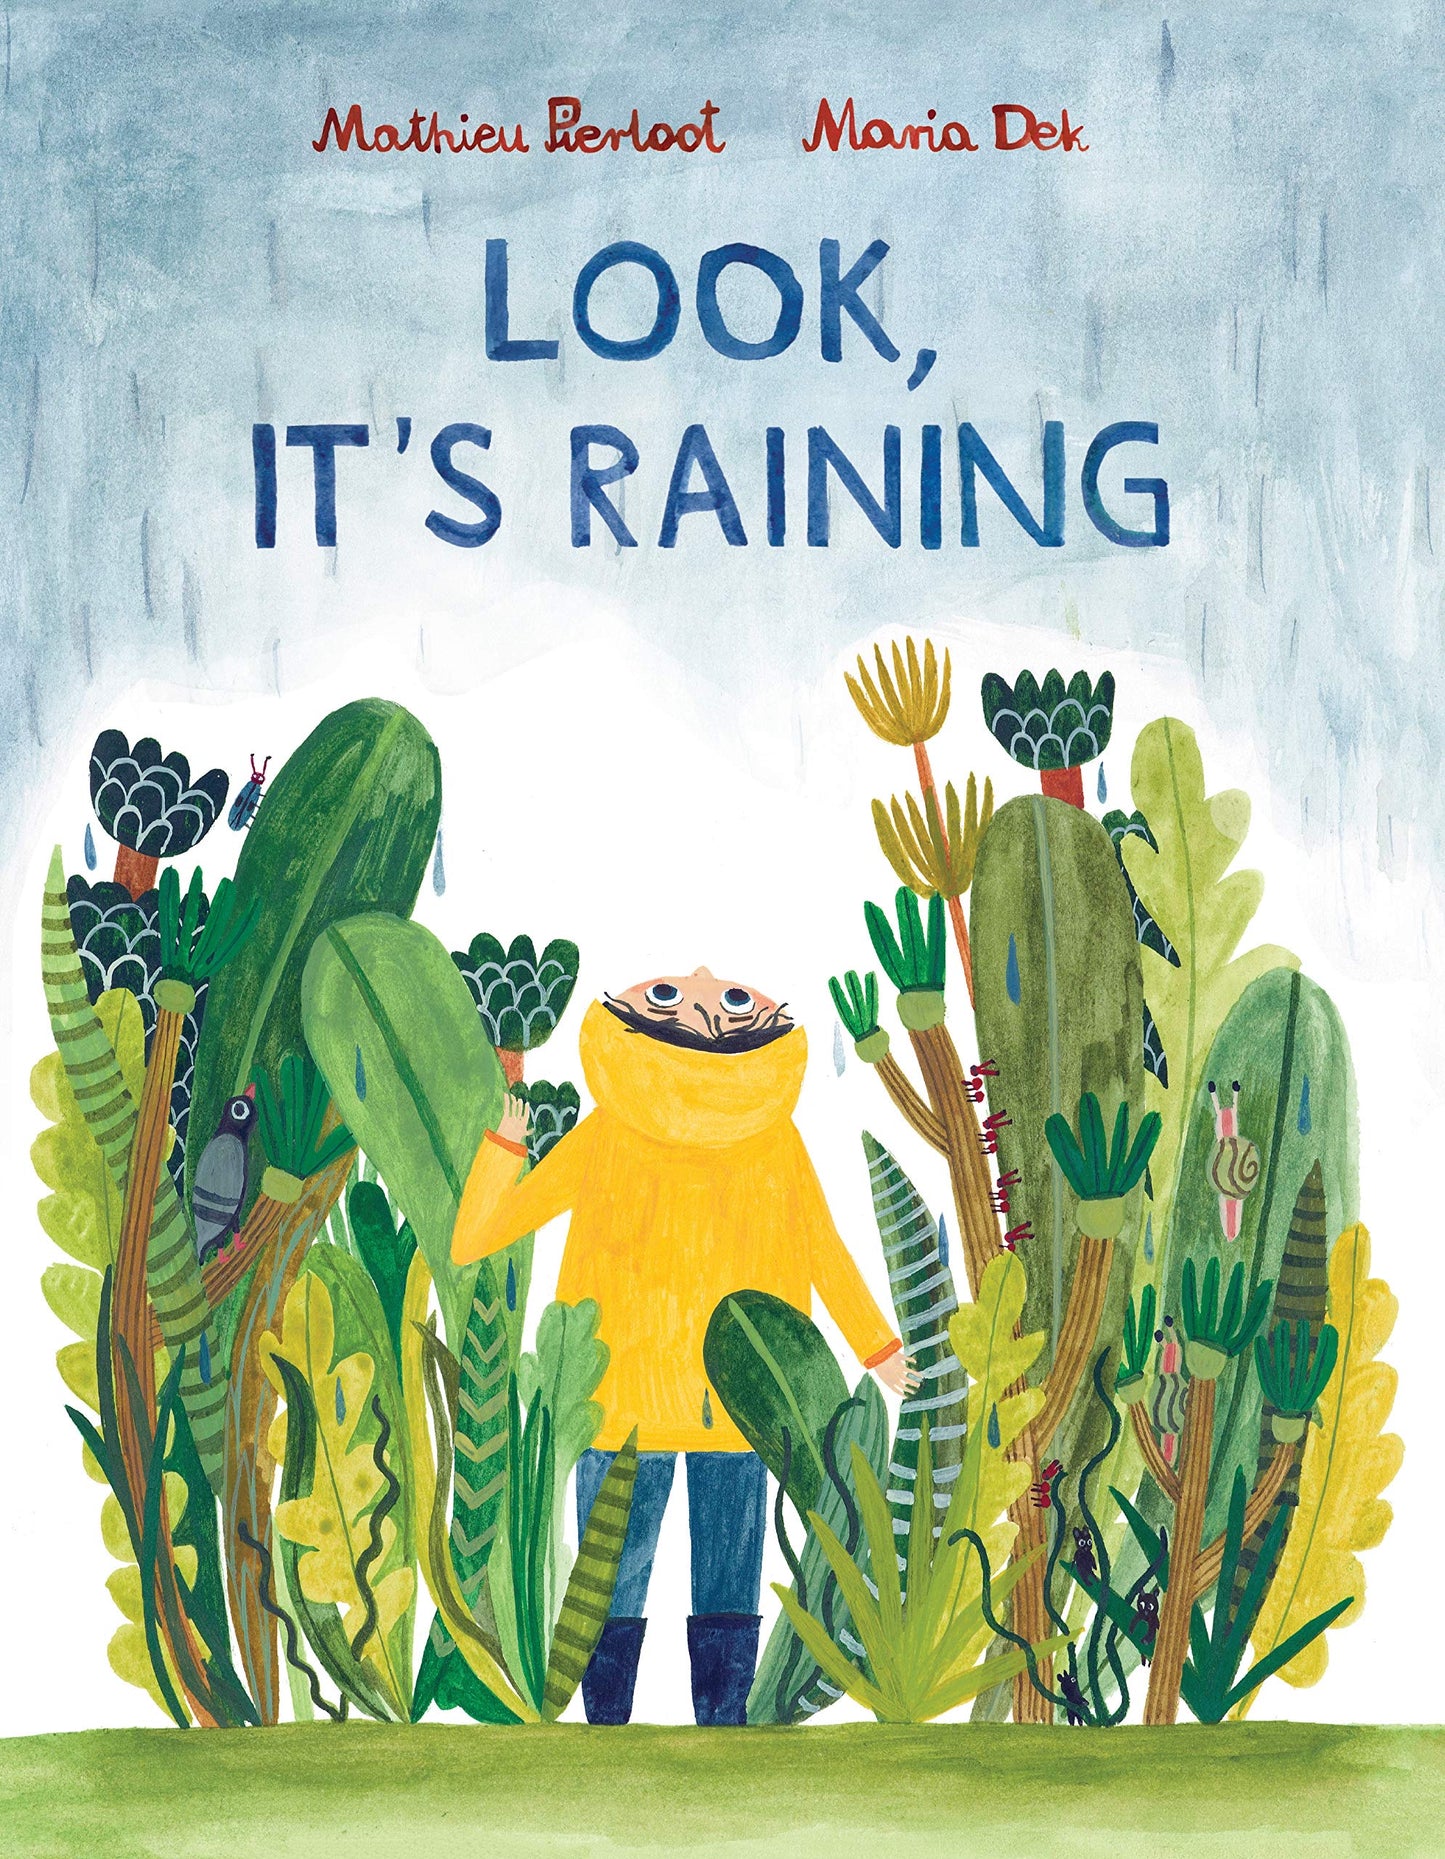 Look it’s Raining - by Matthieu Pierloot and Maria Dek